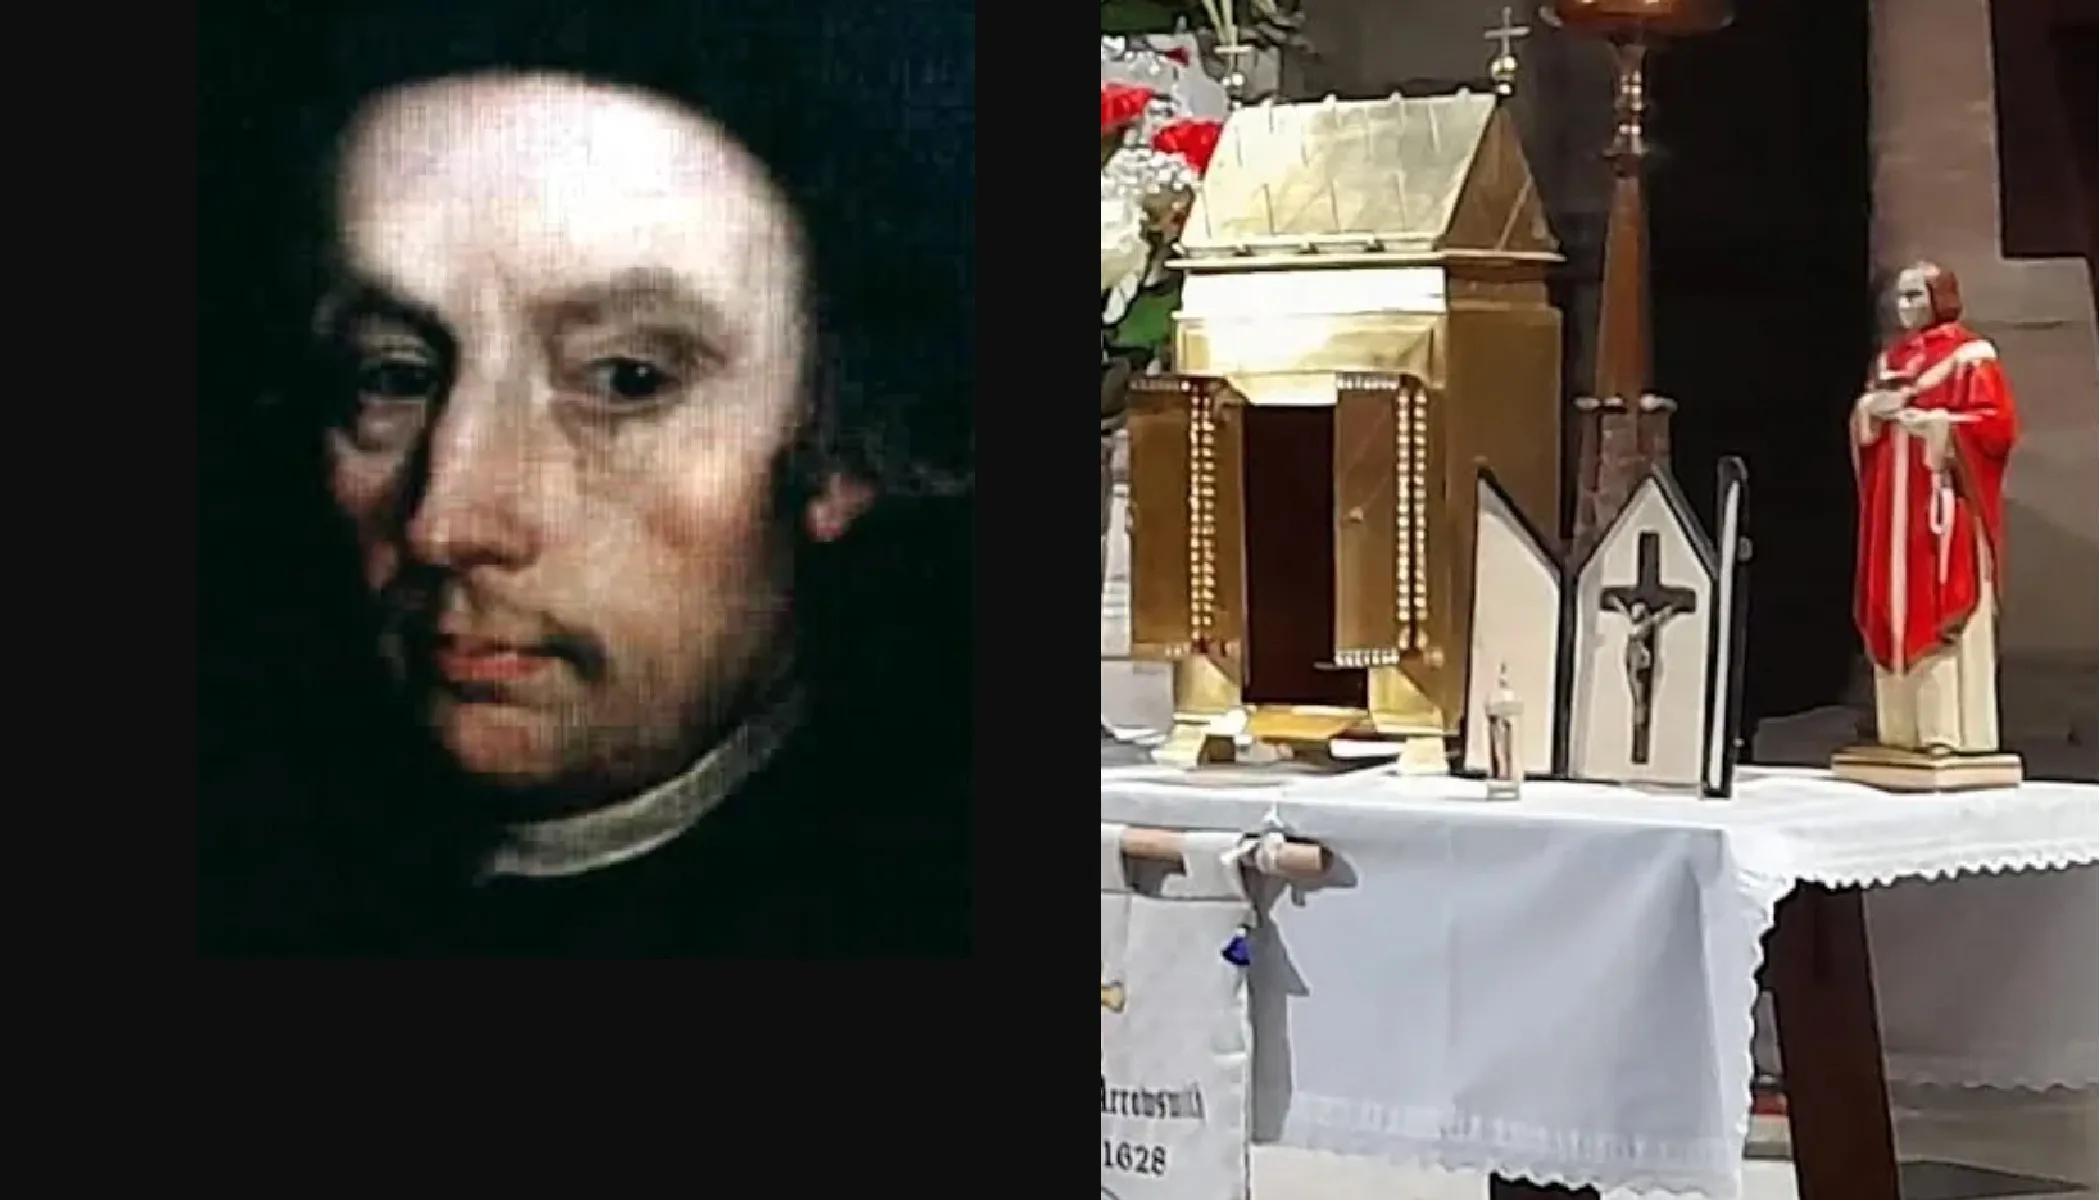 St. Edmund Arrowsmith | An altar display of items associated with 17th century English Martyr St. Edmund Arrowsmith.?w=200&h=150